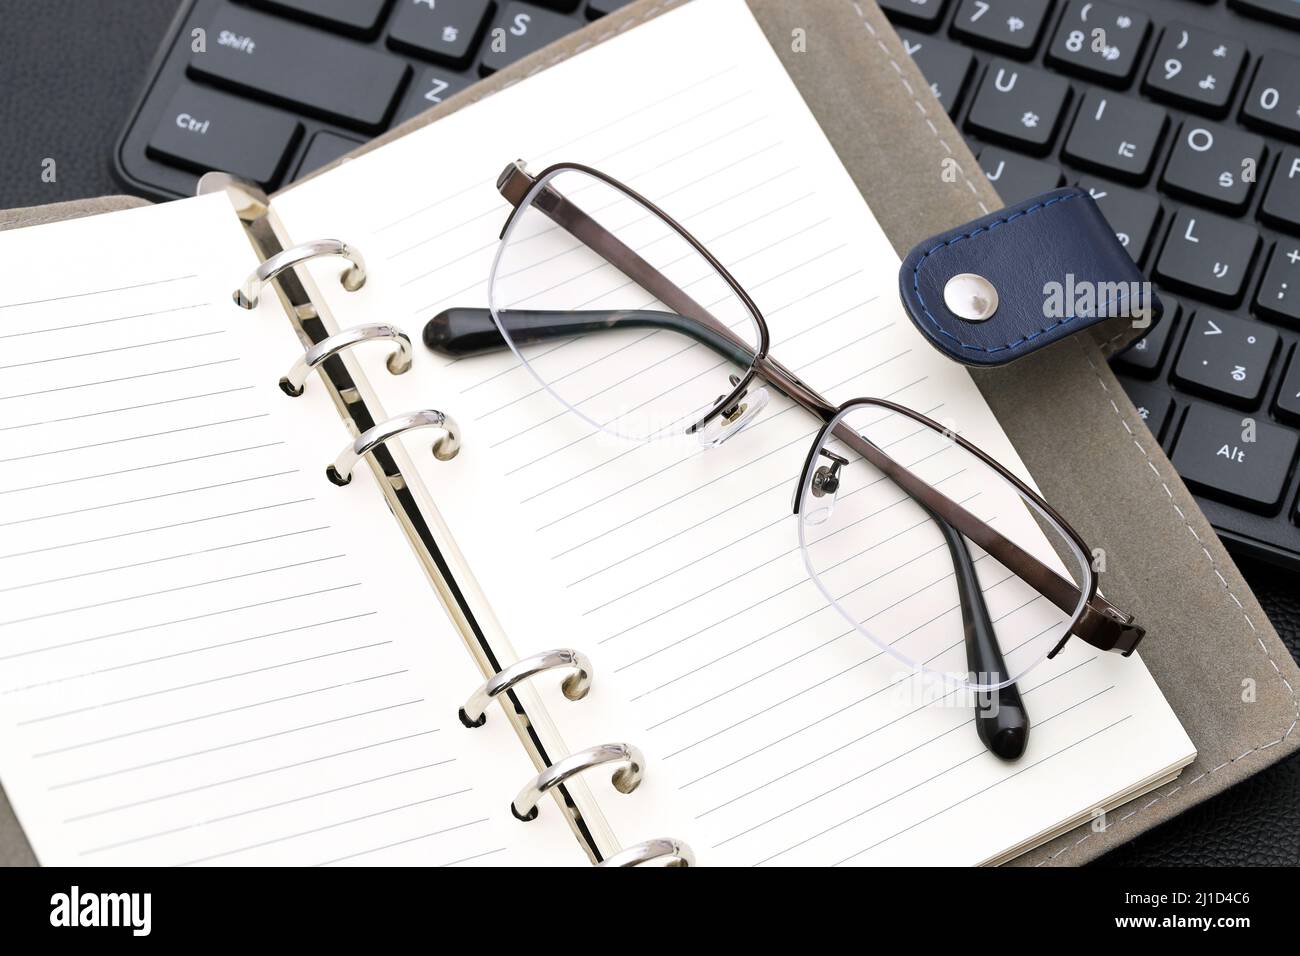 Eyesight glasses with note book, computer keyboard. Alphabetics and Japanese hiragana typing keyboard. Stock Photo